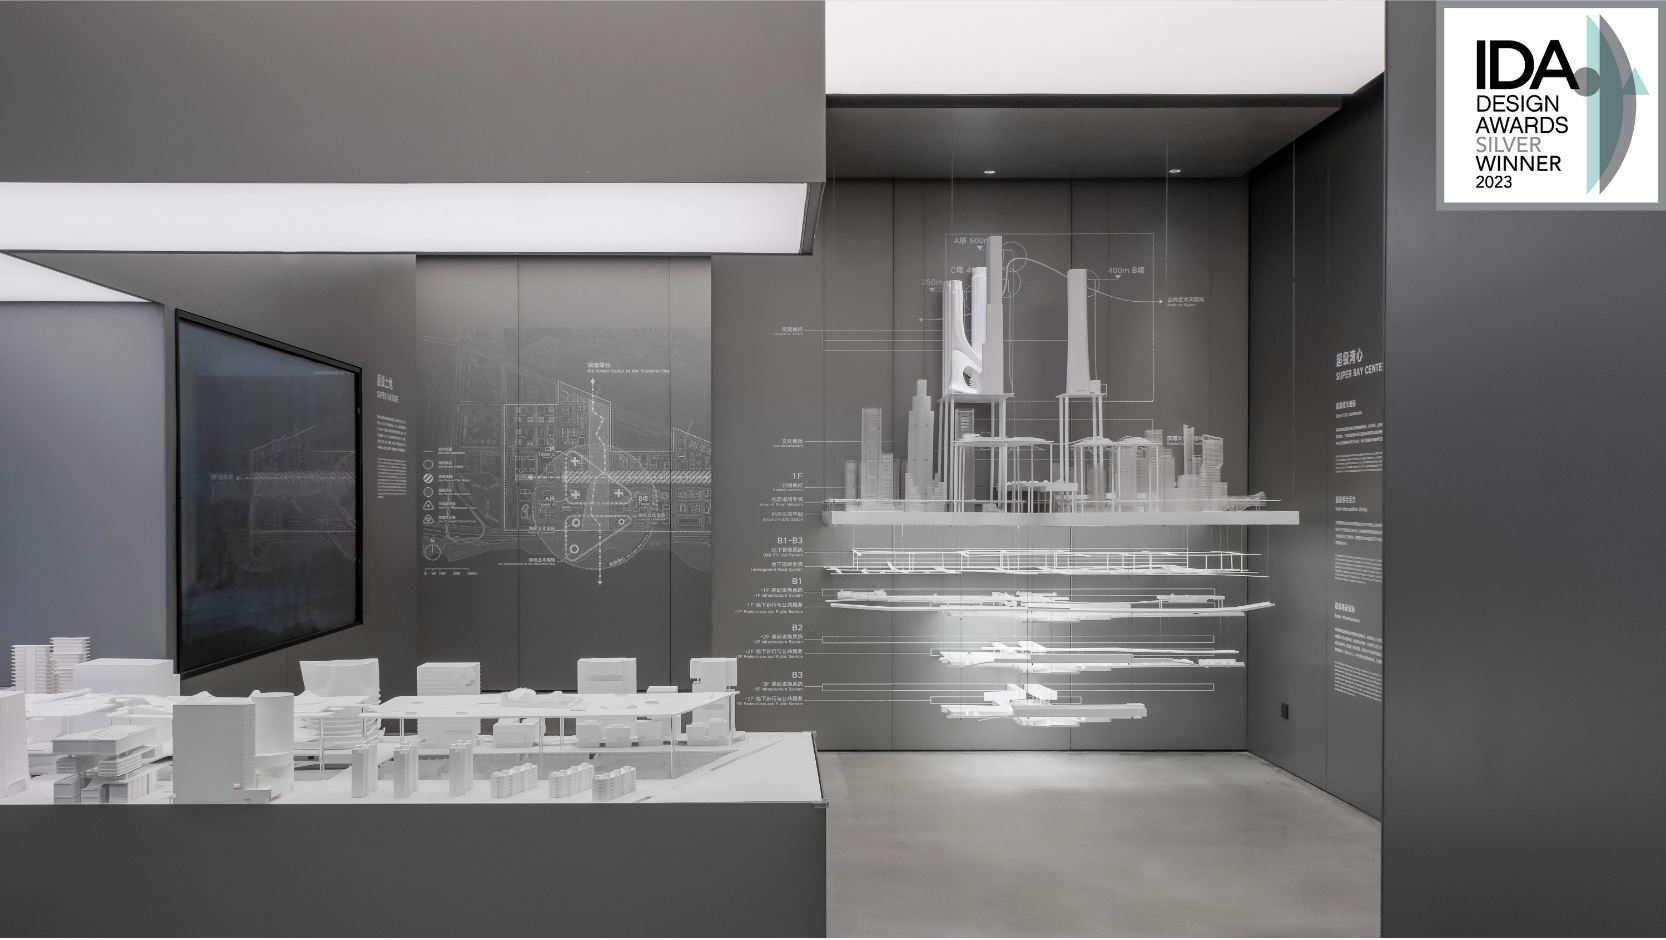 PILLS Artwork “Shenzhen Bay Super Headquarters Base City Showroom Design" Won the 2023 US IDA International Design Award Silver Award